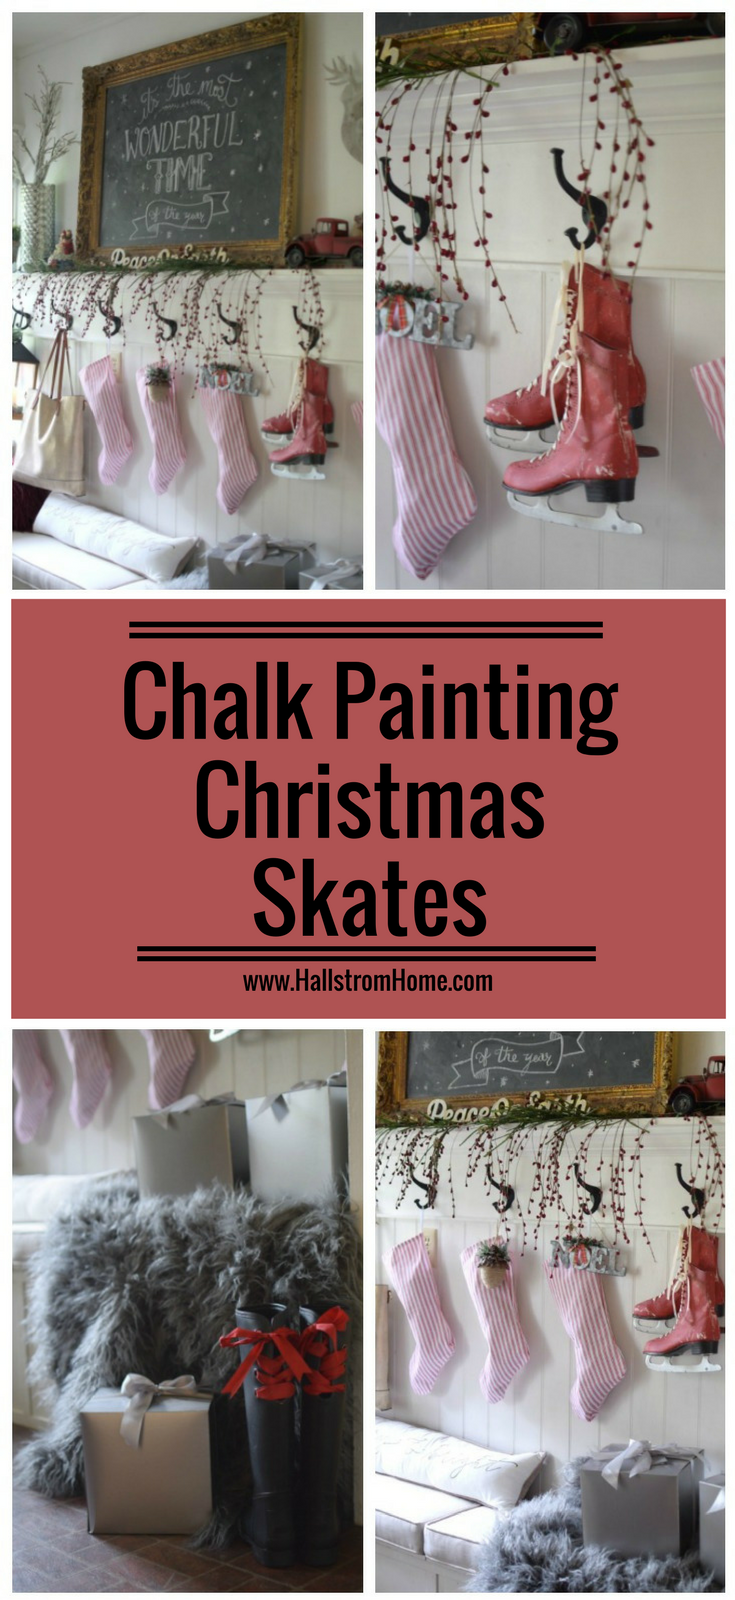 Chalk Painting Christmas Skates